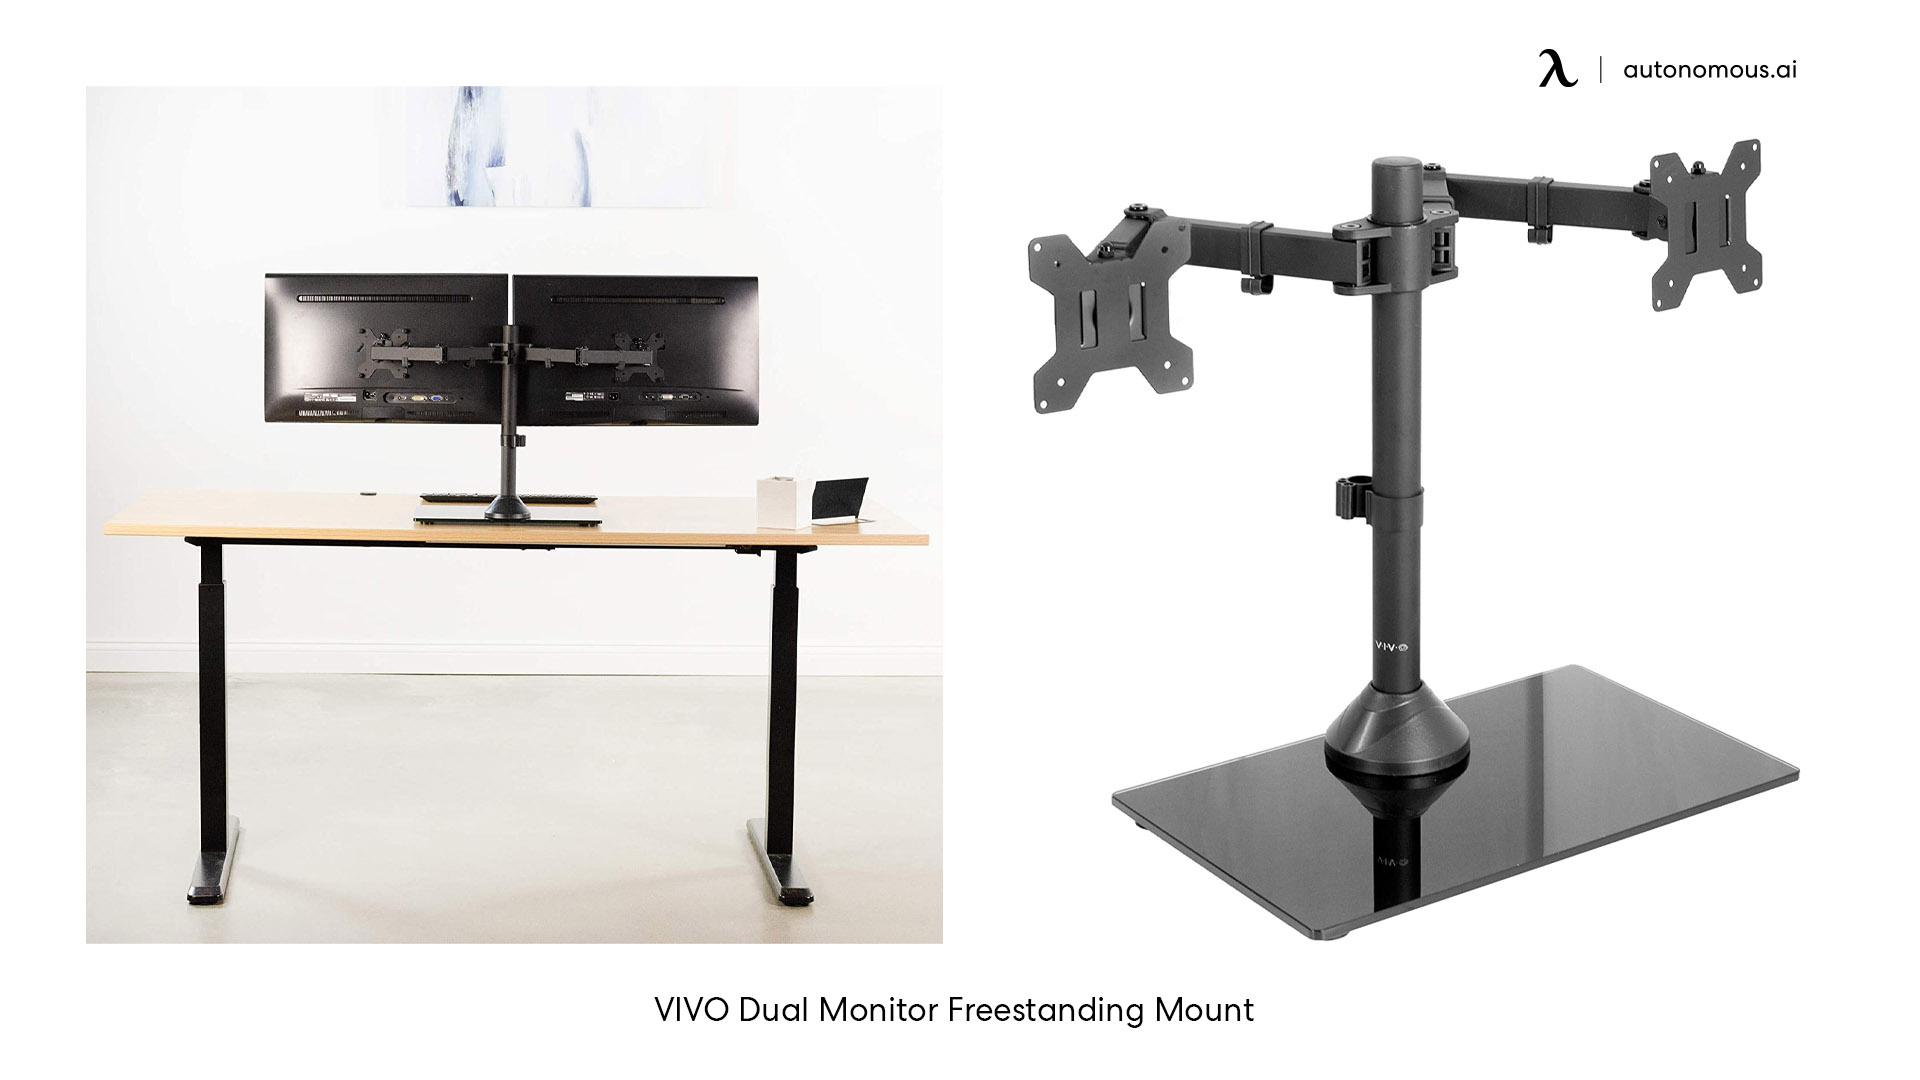 VIVO Dual Monitor Freestanding Mount